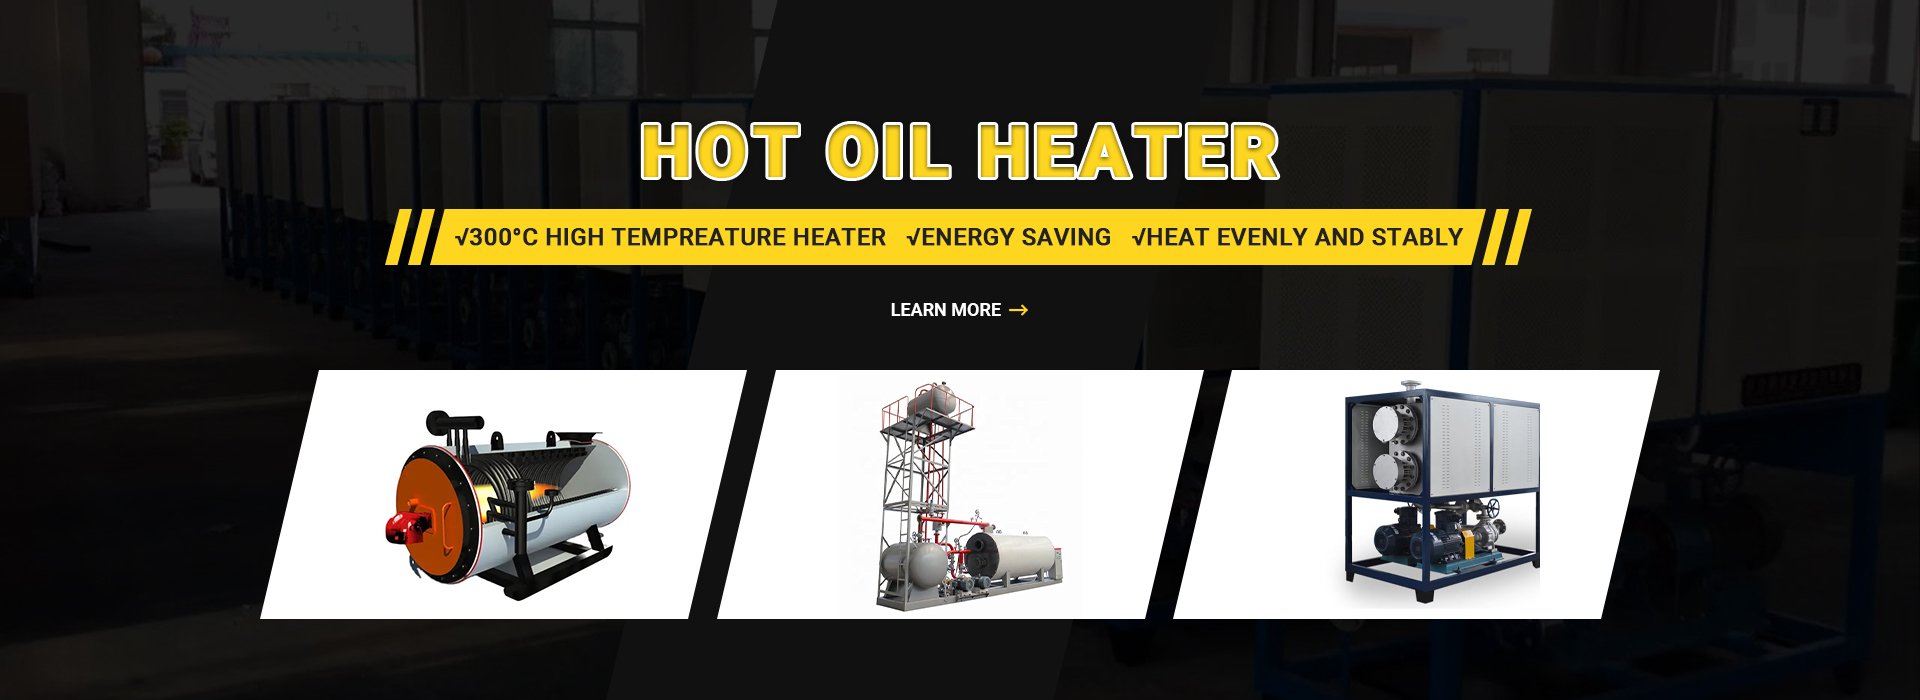 Hot Oil Boiler Thermal Oil Furnace